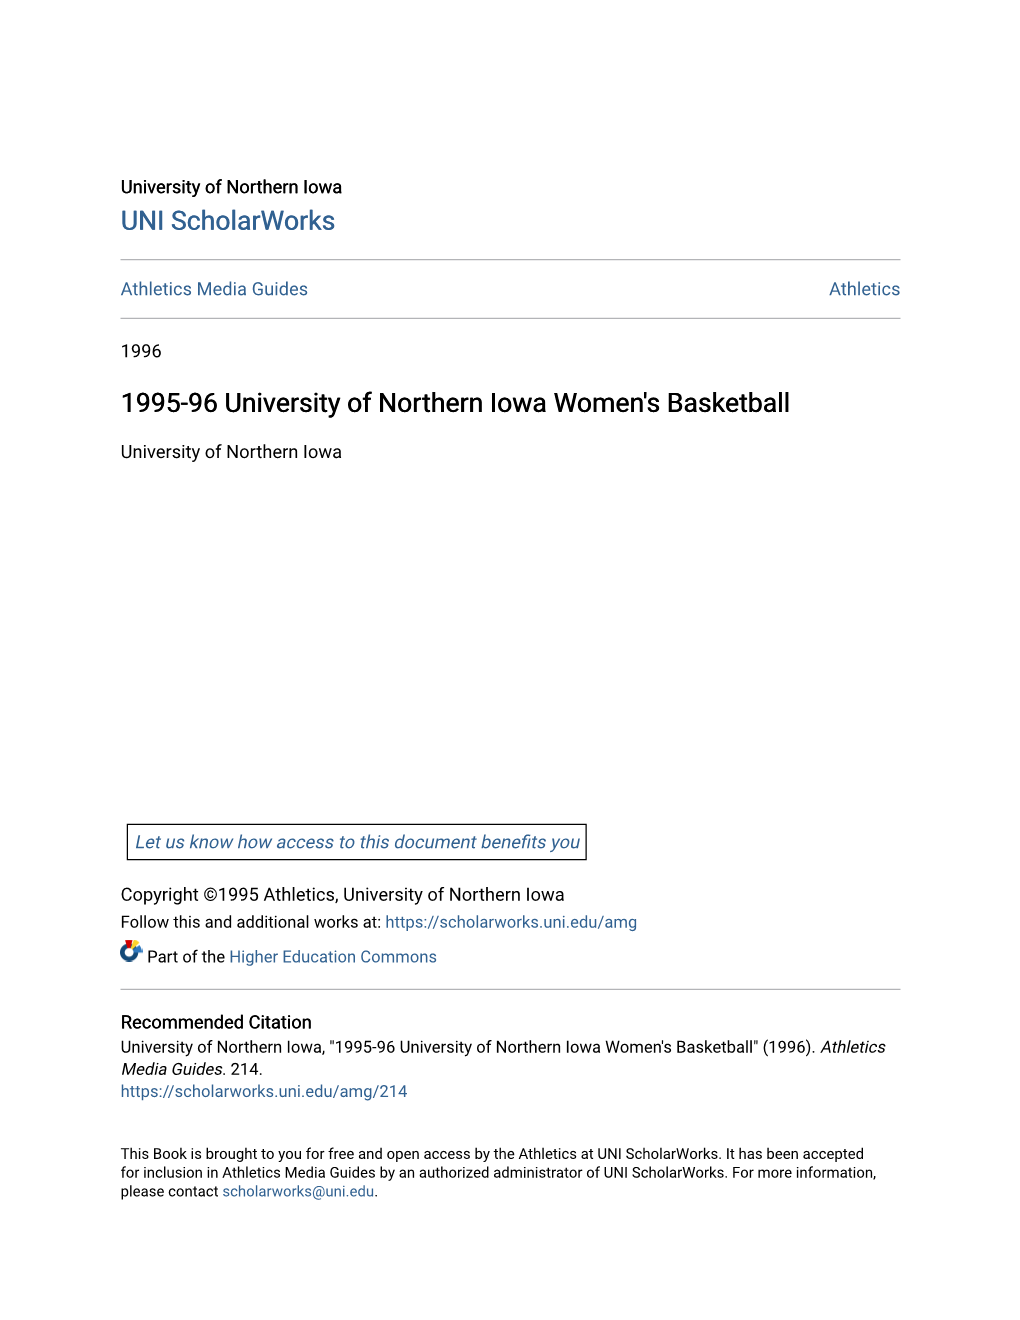 1995-96 University of Northern Iowa Women's Basketball